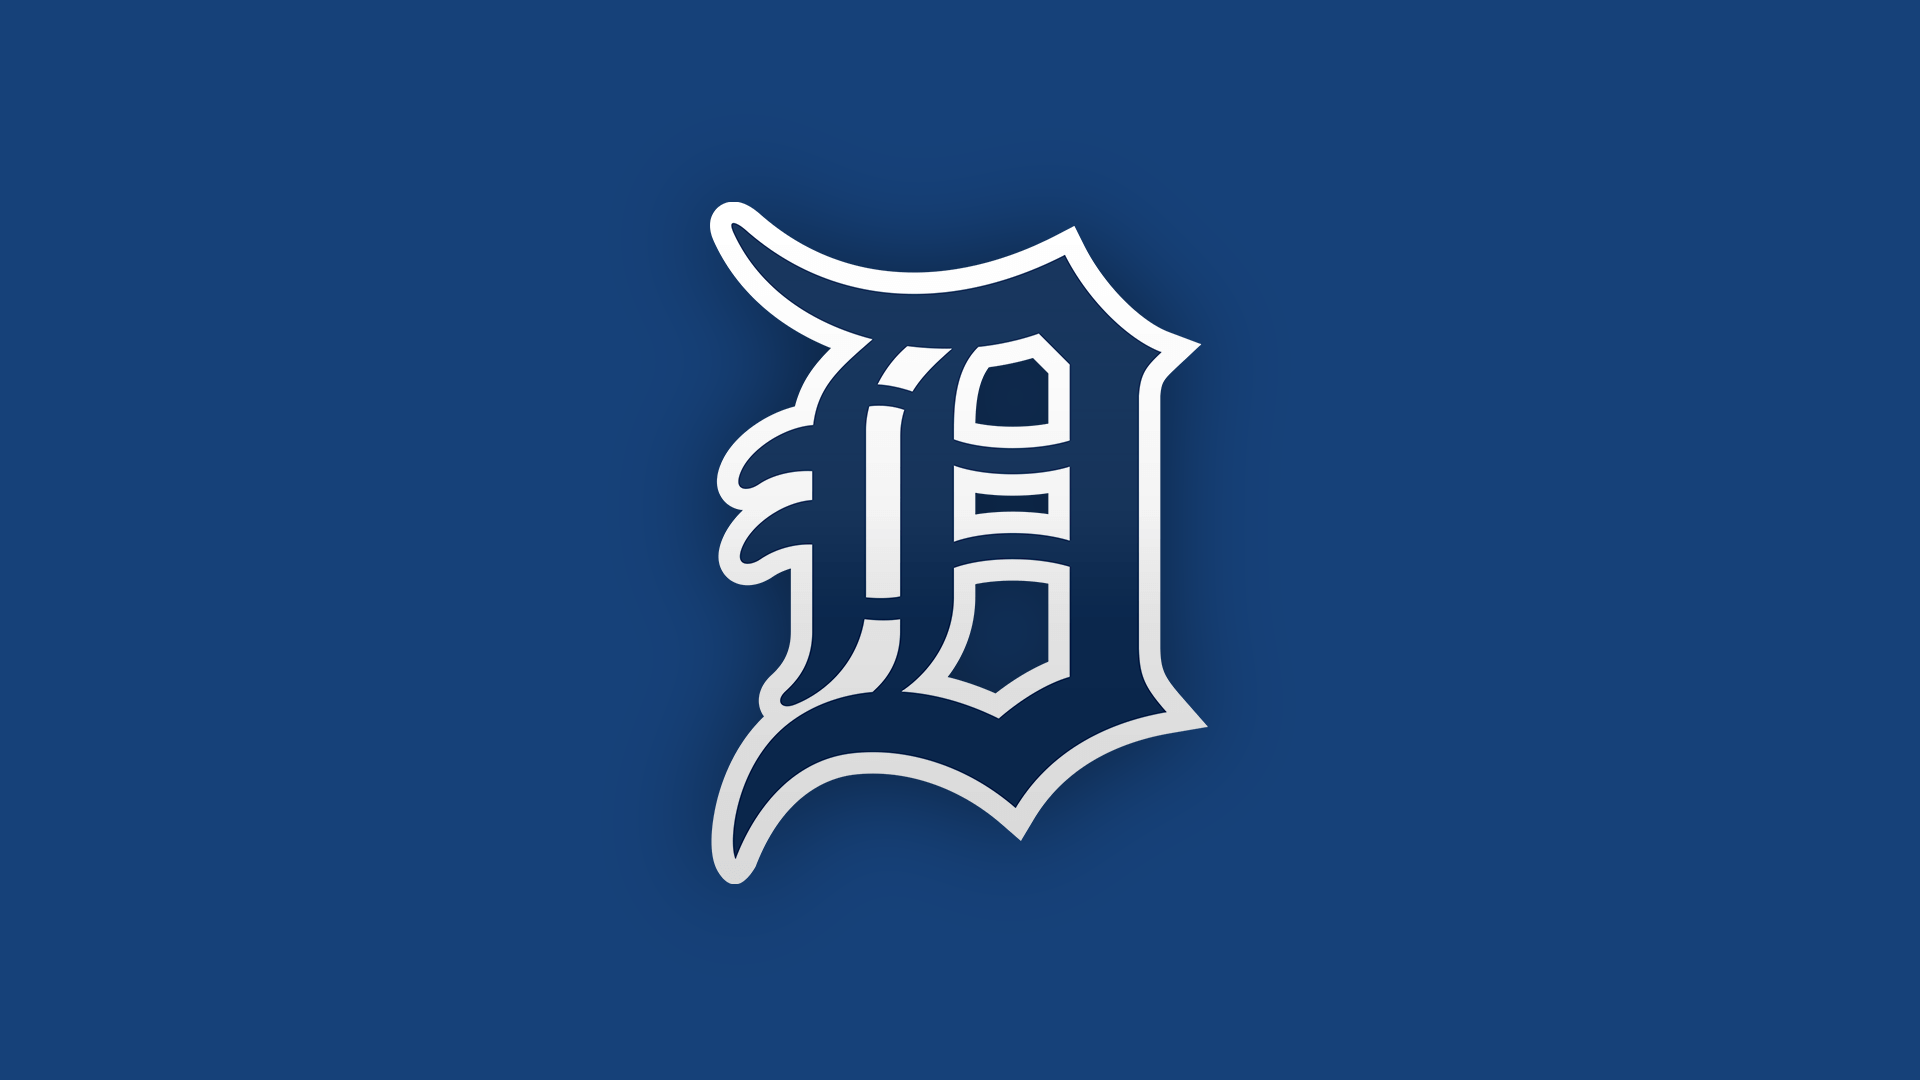 Detroit Tigers Logo Wallpapers Top Free Detroit Tigers Logo